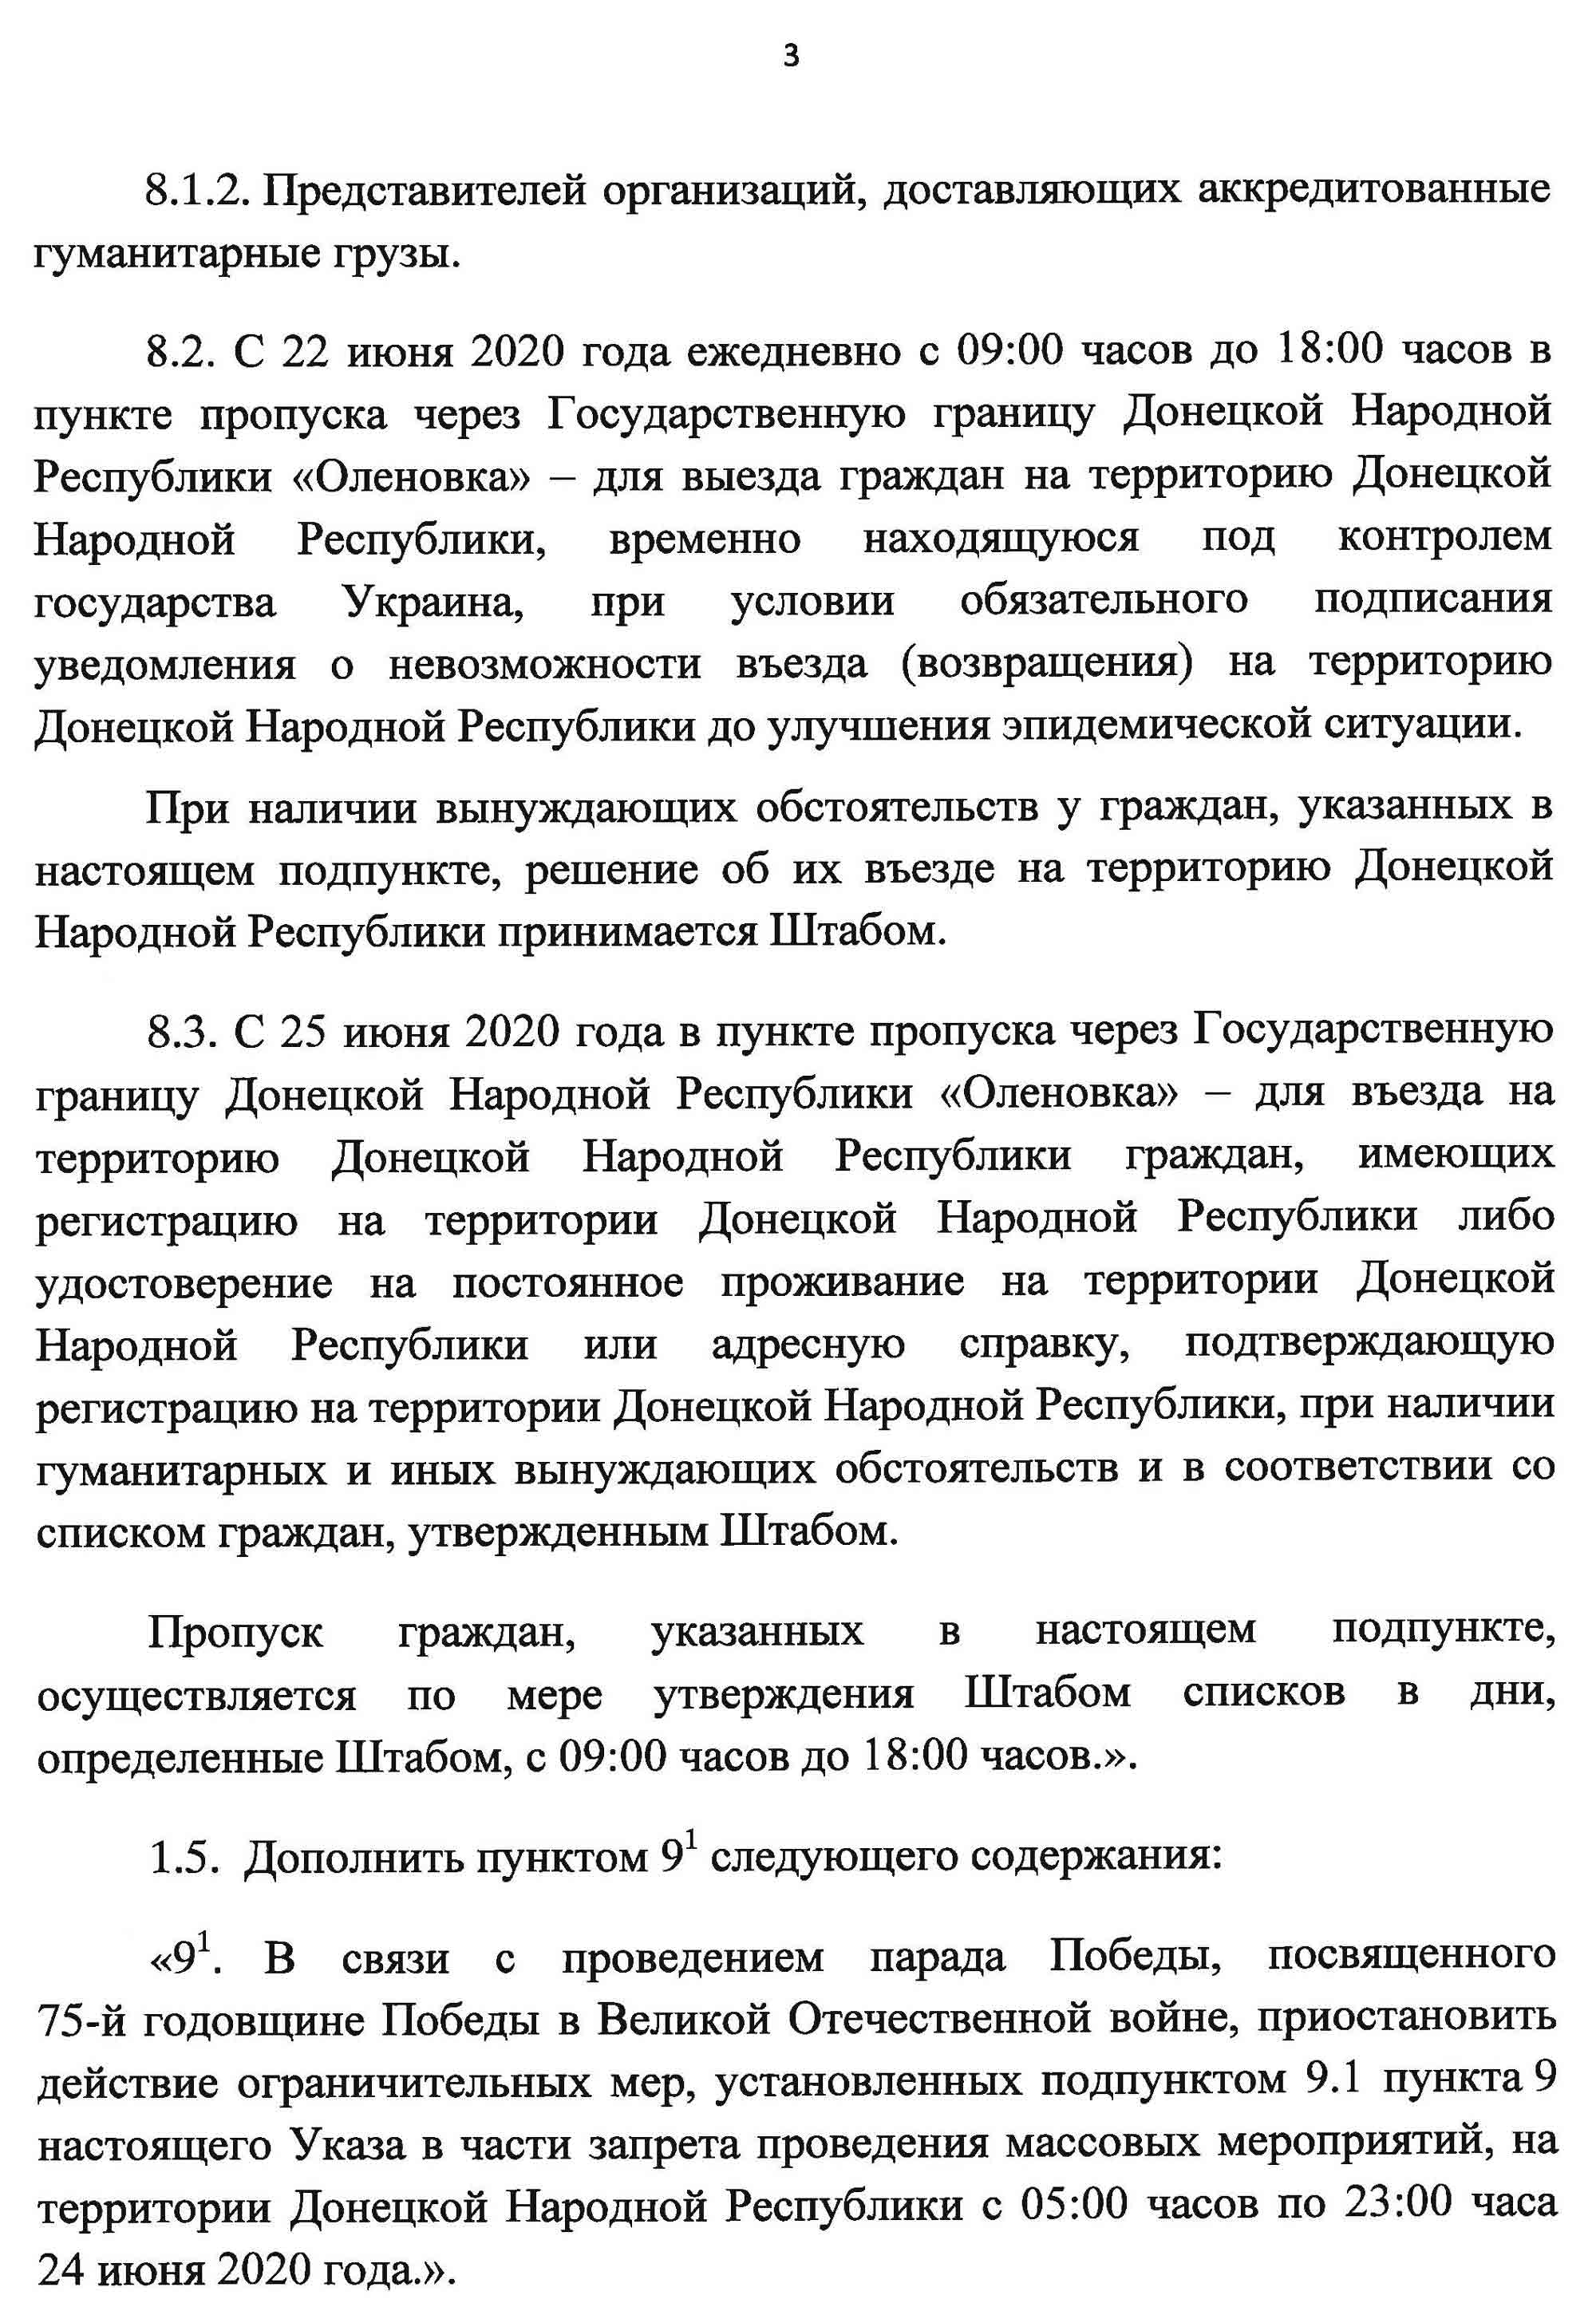 Глава ДНР Указом № 197 от 21 июня 2020 года